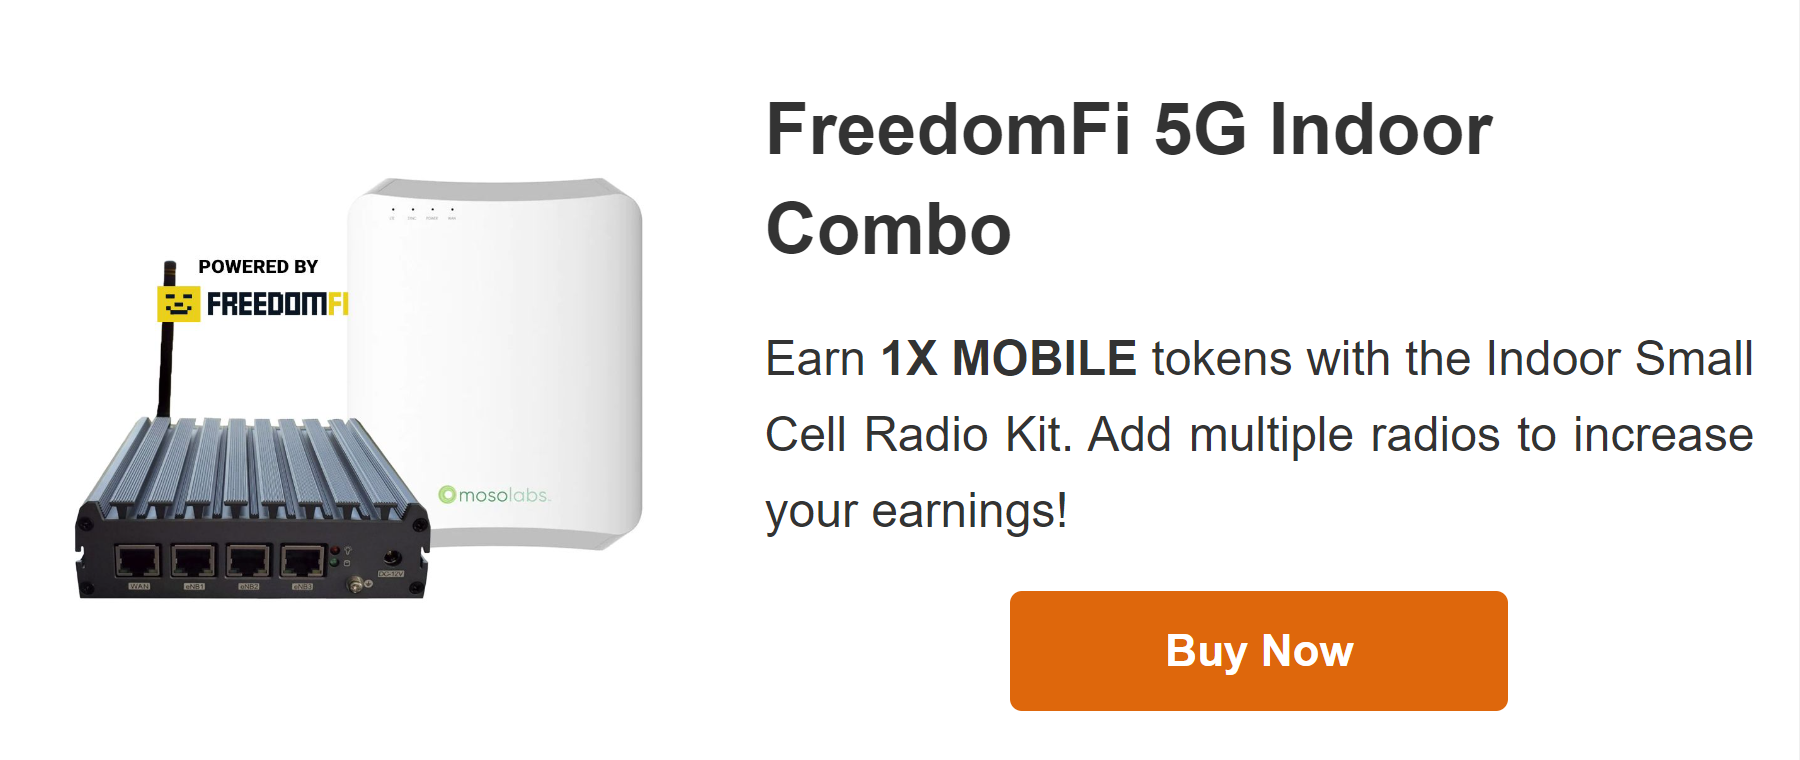 FreedomFi 5G Indoor Combp